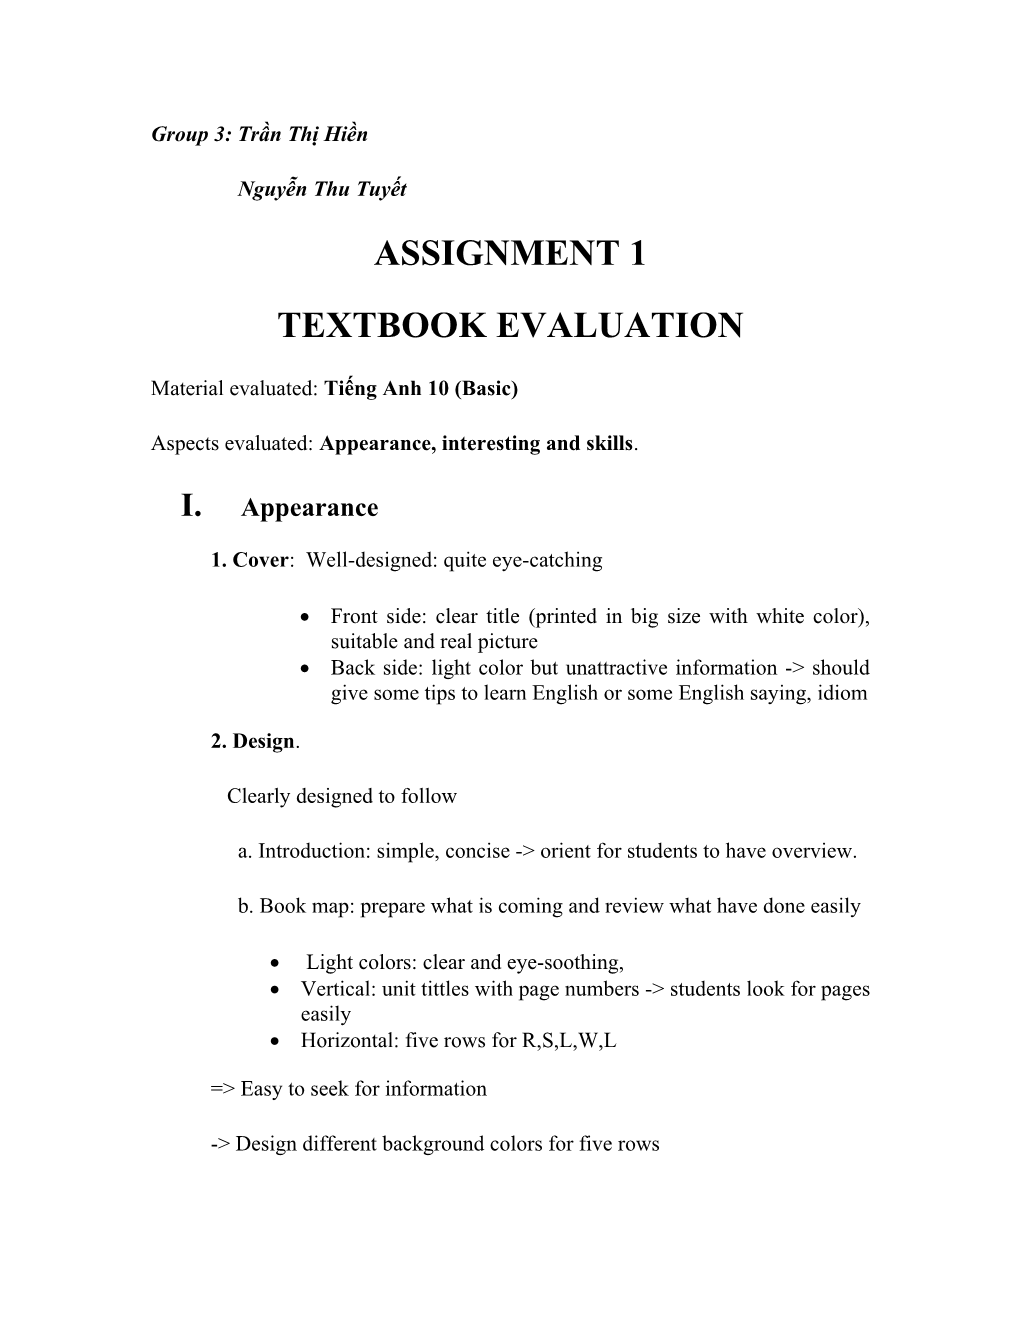 Textbook Evaluation